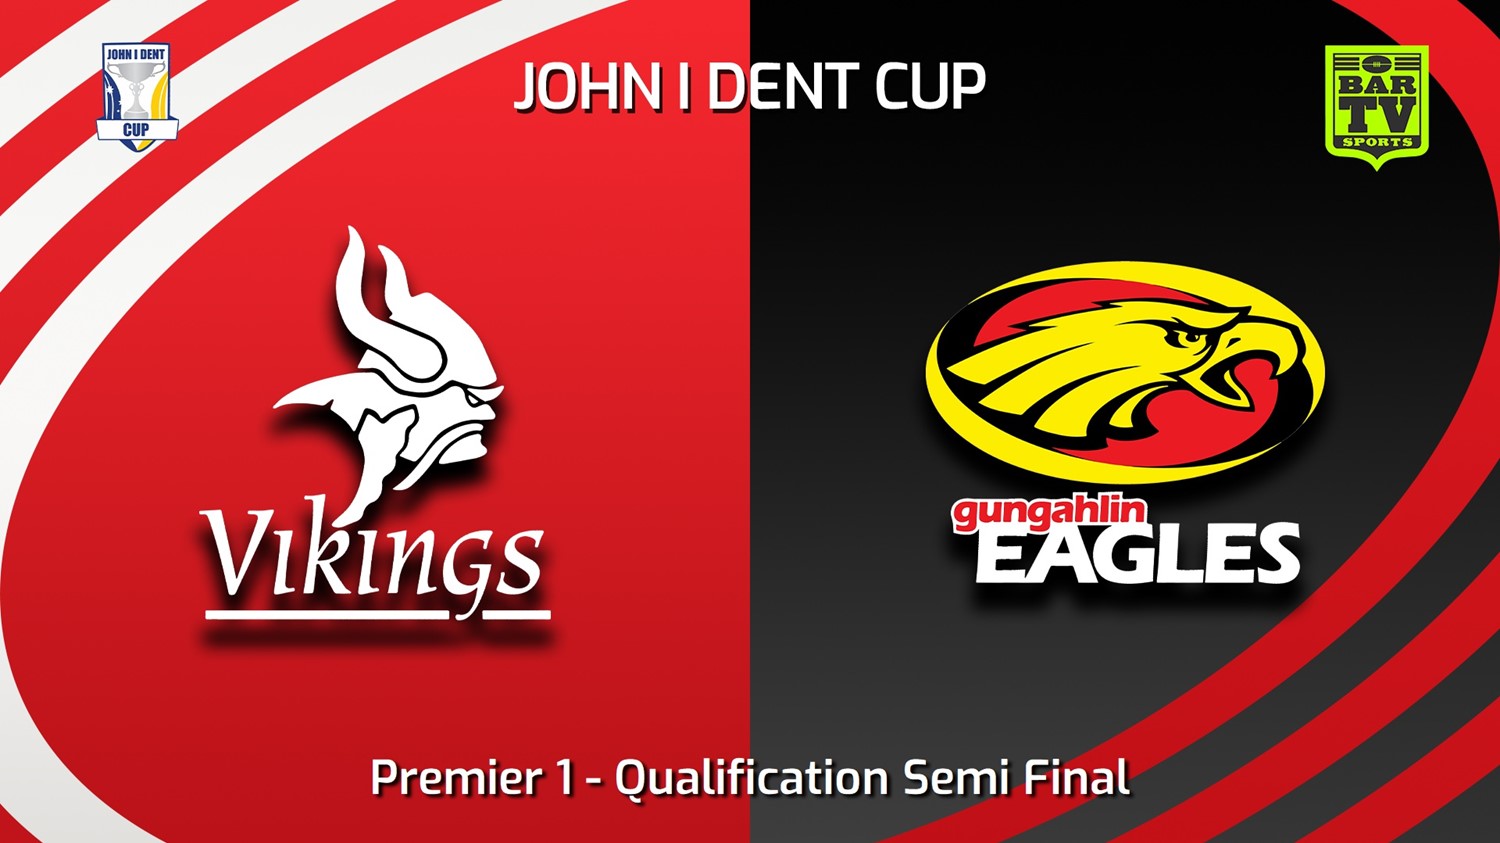 230812-John I Dent (ACT) Qualification Semi Final - Premier 1 - Tuggeranong Vikings v Gungahlin Eagles Minigame Slate Image